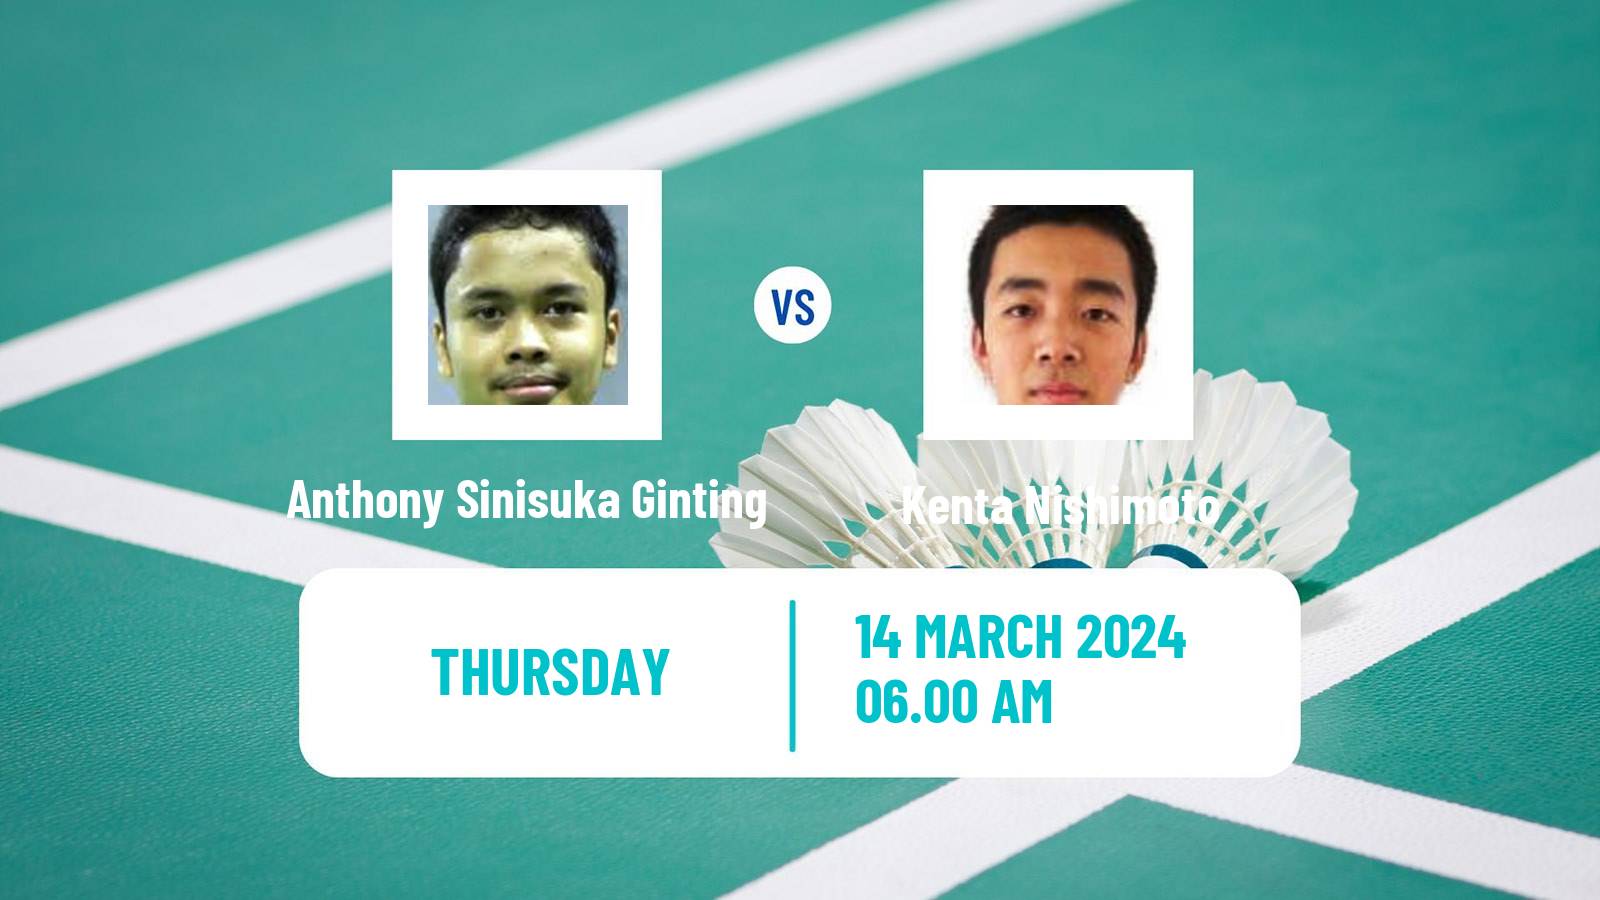 Badminton BWF World Tour All England Open Men Anthony Sinisuka Ginting - Kenta Nishimoto